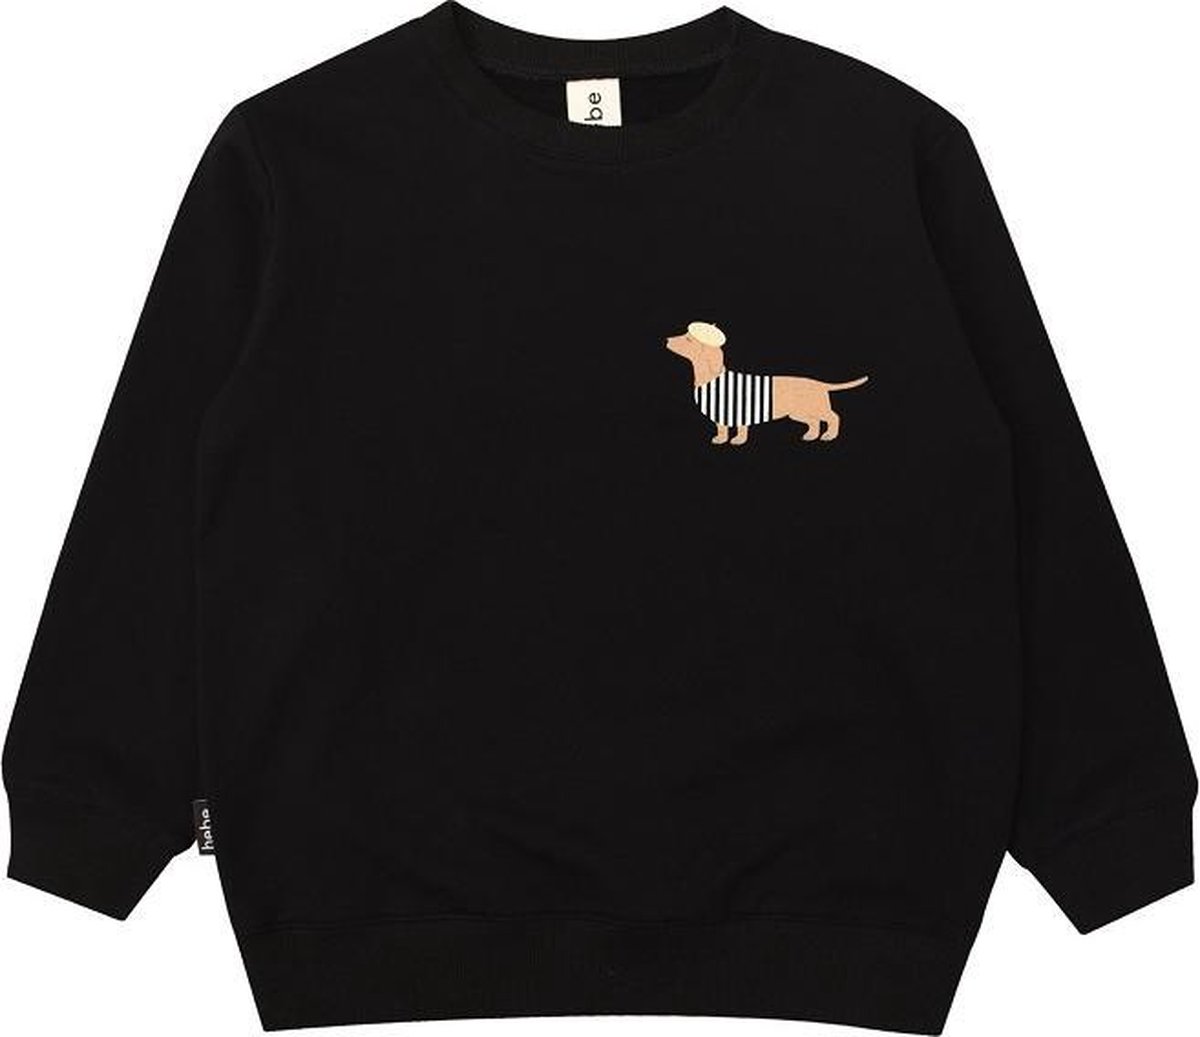 HEBE - sweater - Parisian dog - zwart - Maat 98/104